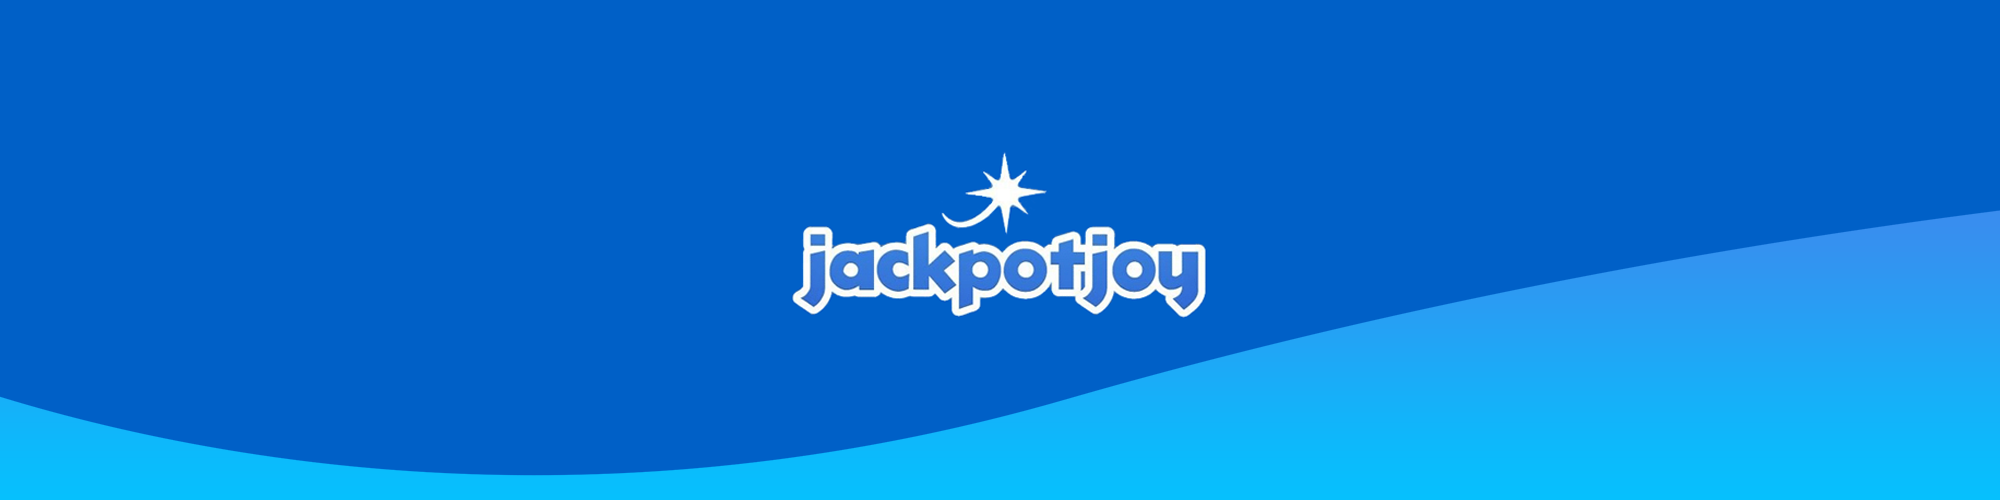 Jackpotjoy Bingo Alternative on EazeGames